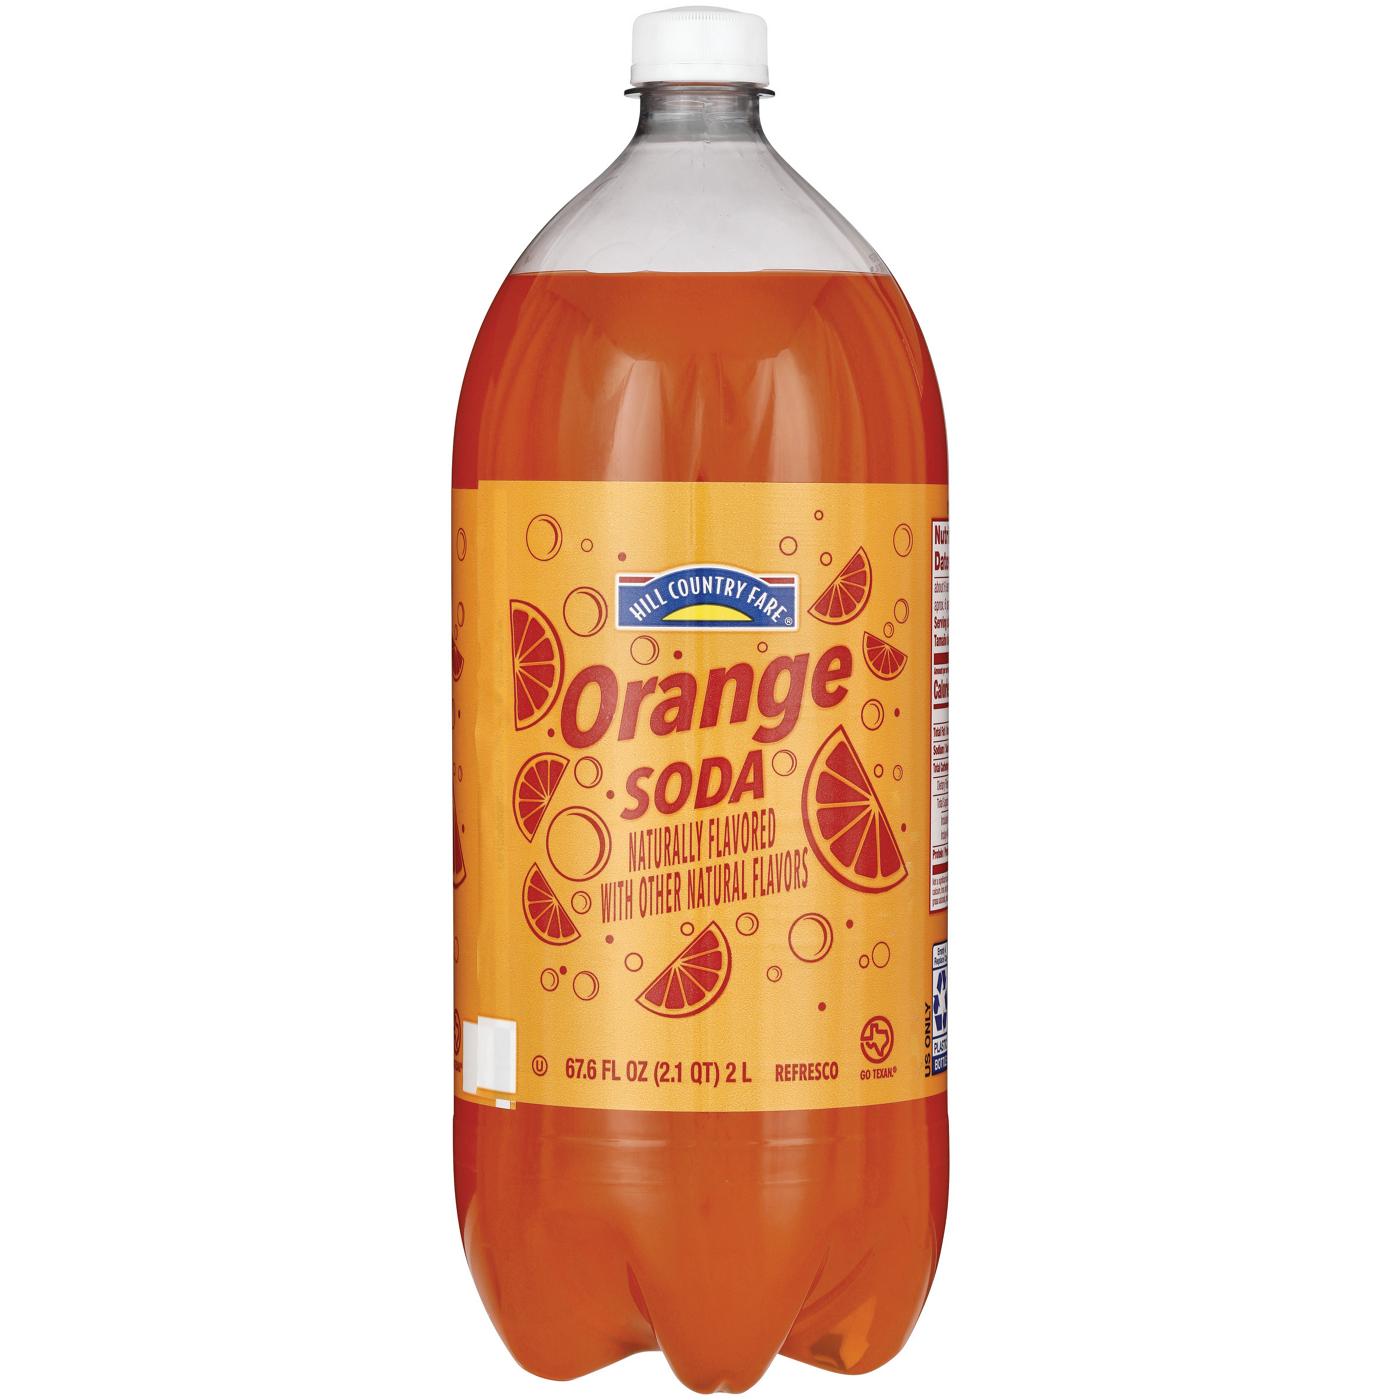 HCF Hill Country Fair Orange Soda; image 1 of 2